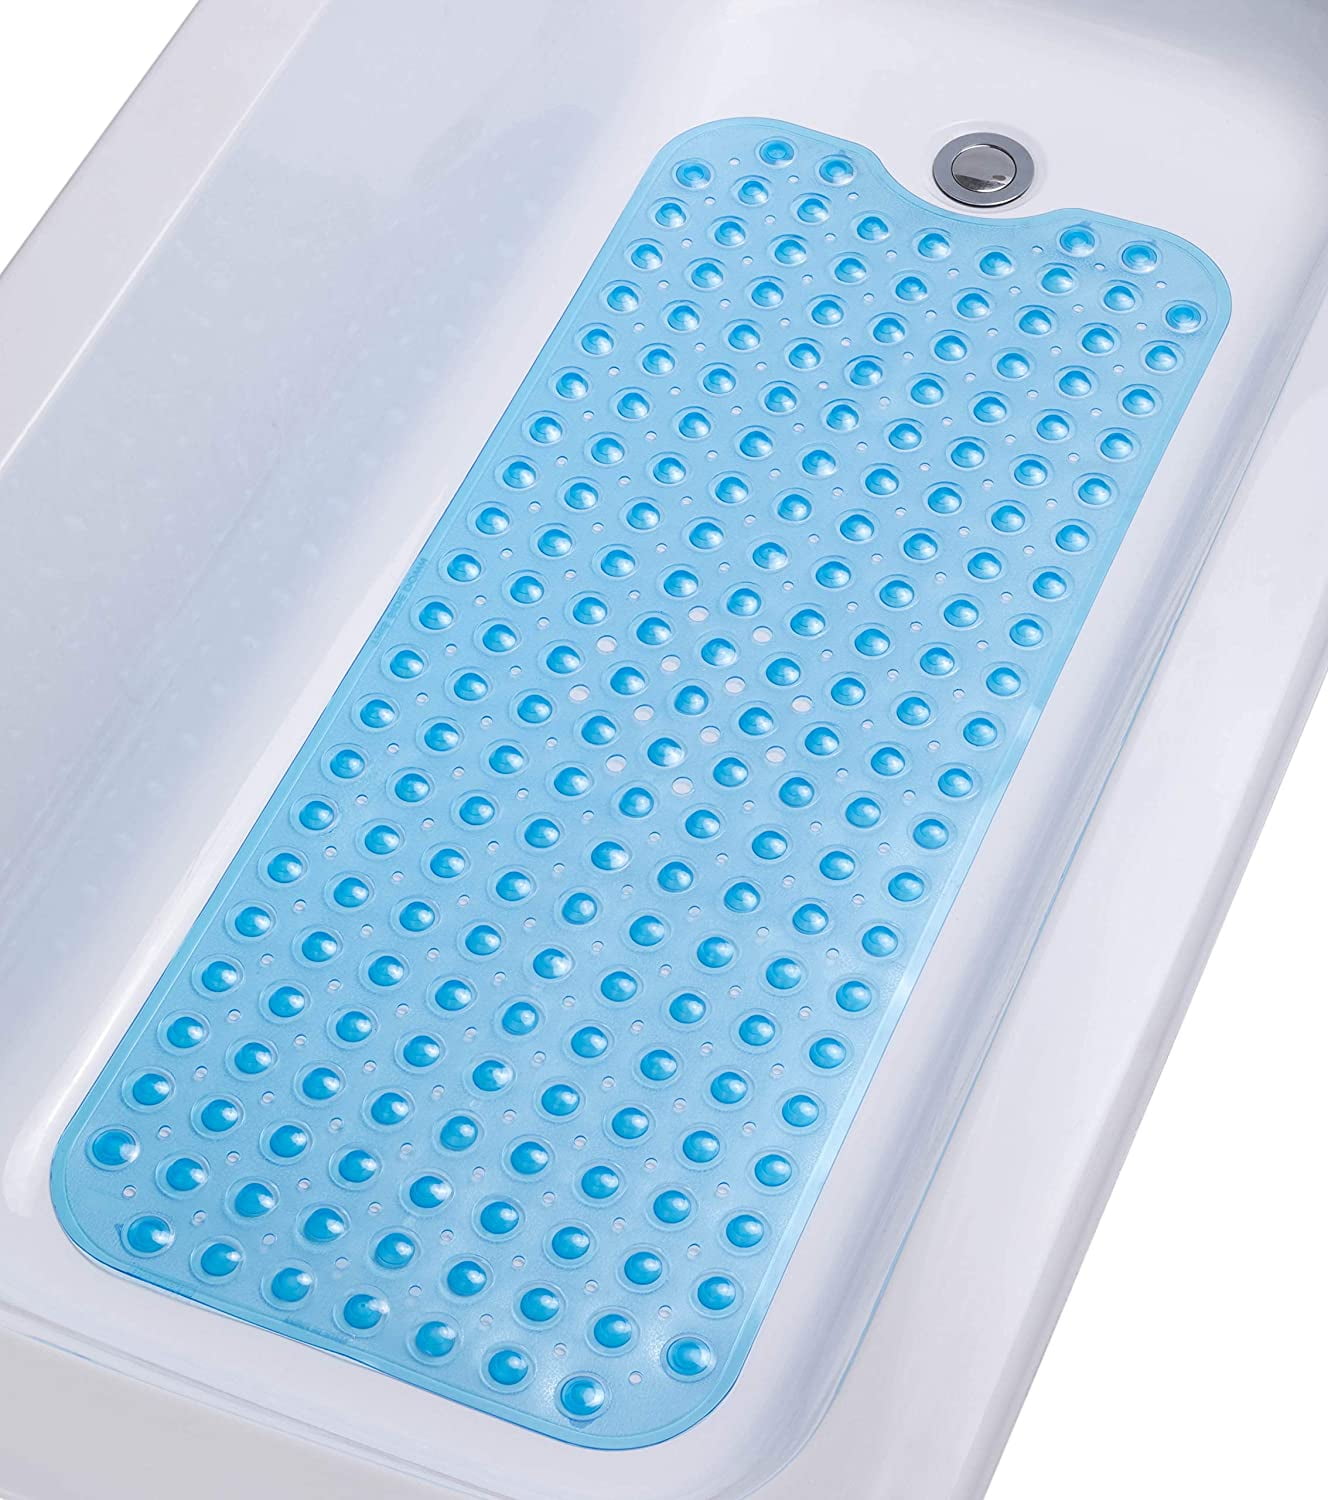 ComfiLife Bath Mat for Bathroom Tub and Shower – Non Slip Extra Large  Bathtub Mat with Drain Holes & Suction Cups - Pebble